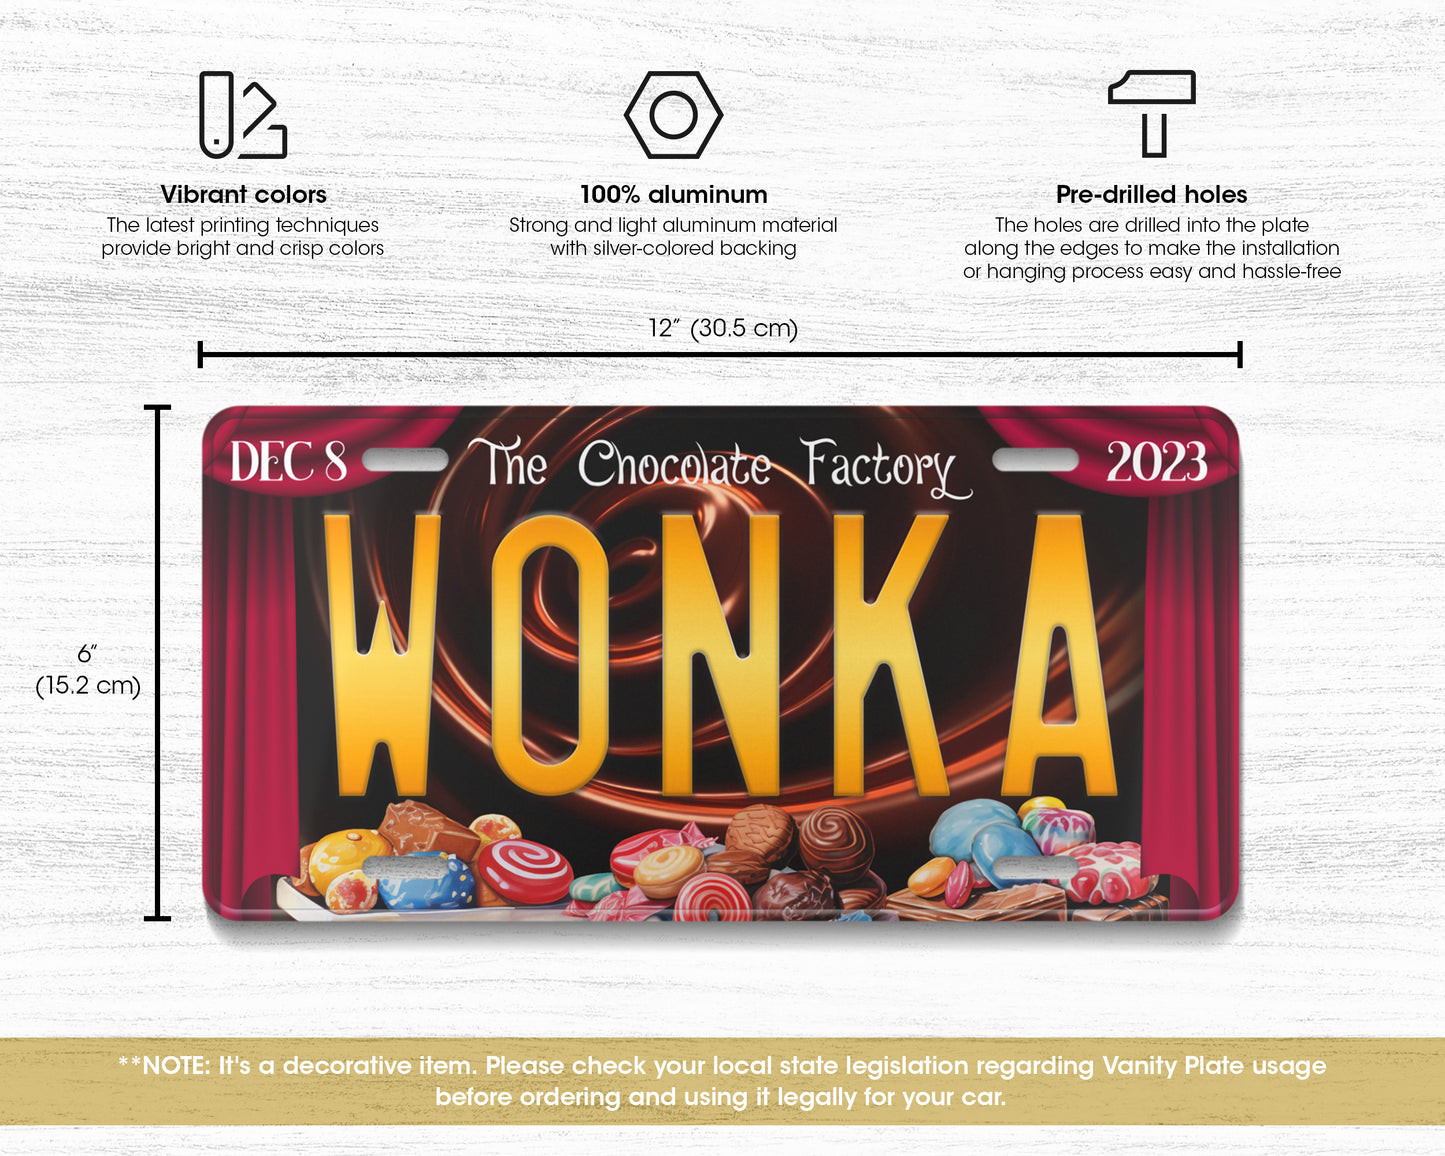 Wonka (2023) movie license plate